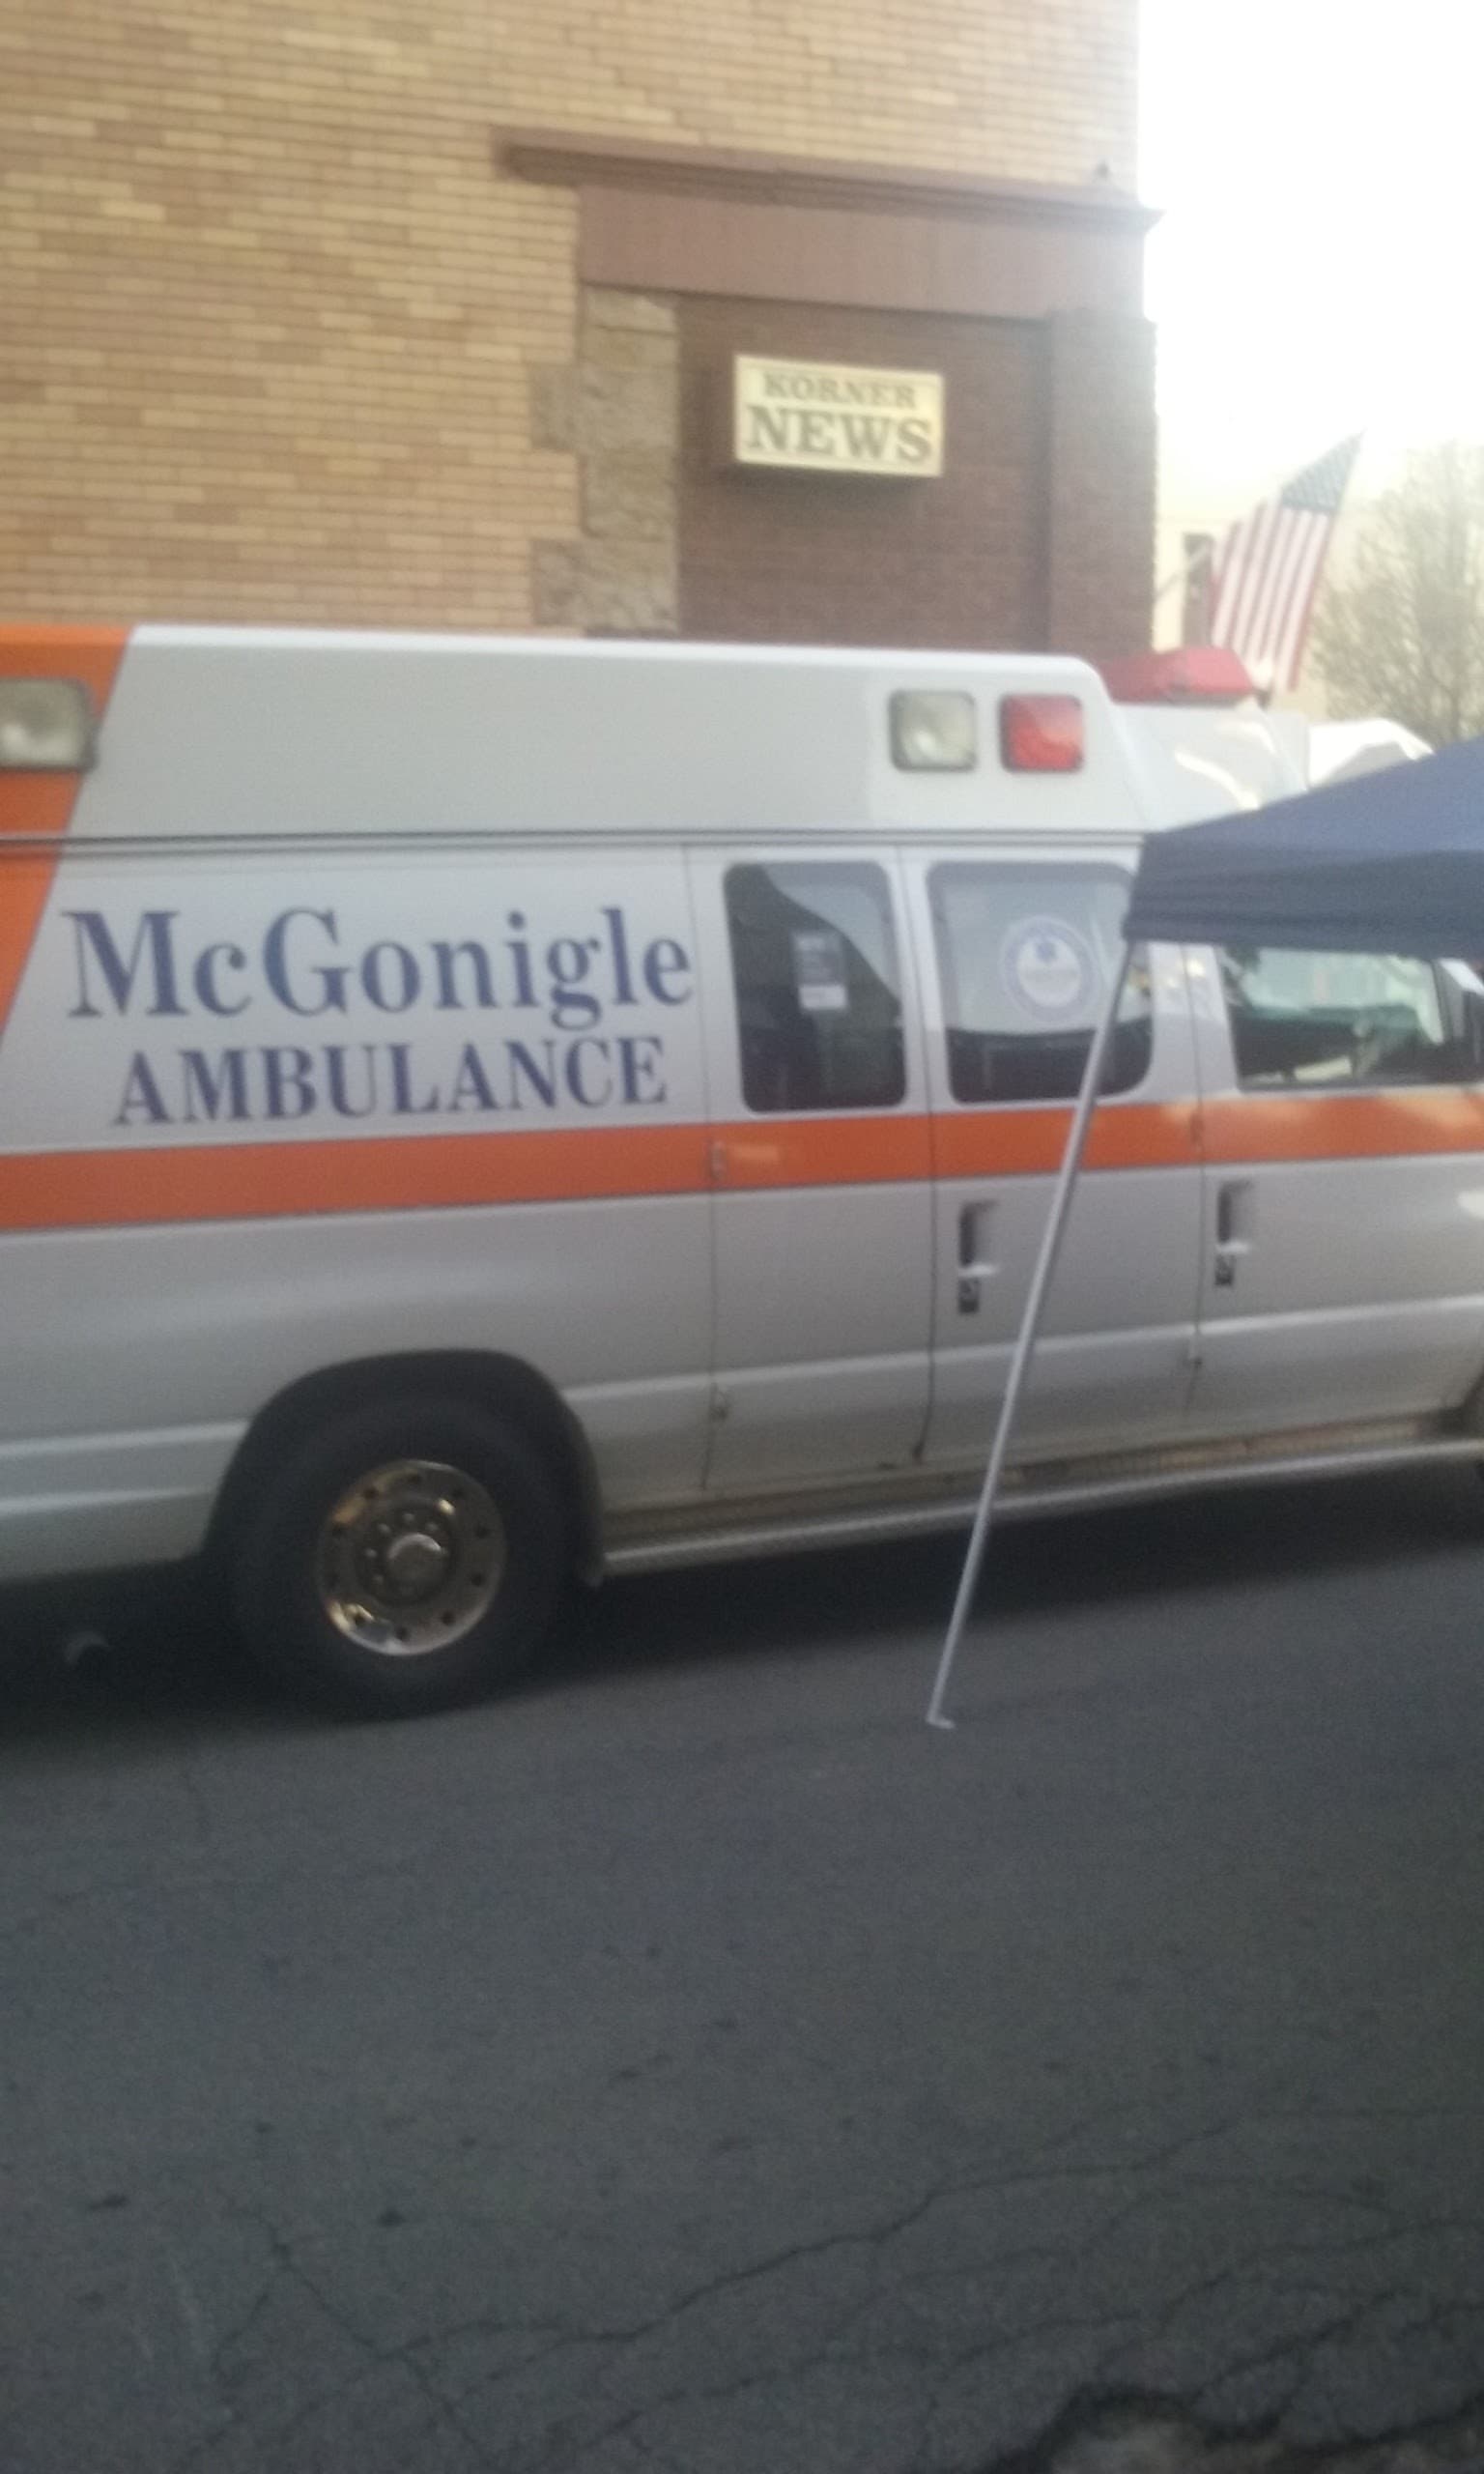 McGonigle Ambulance Service - Hermitage, PA, US, community health center